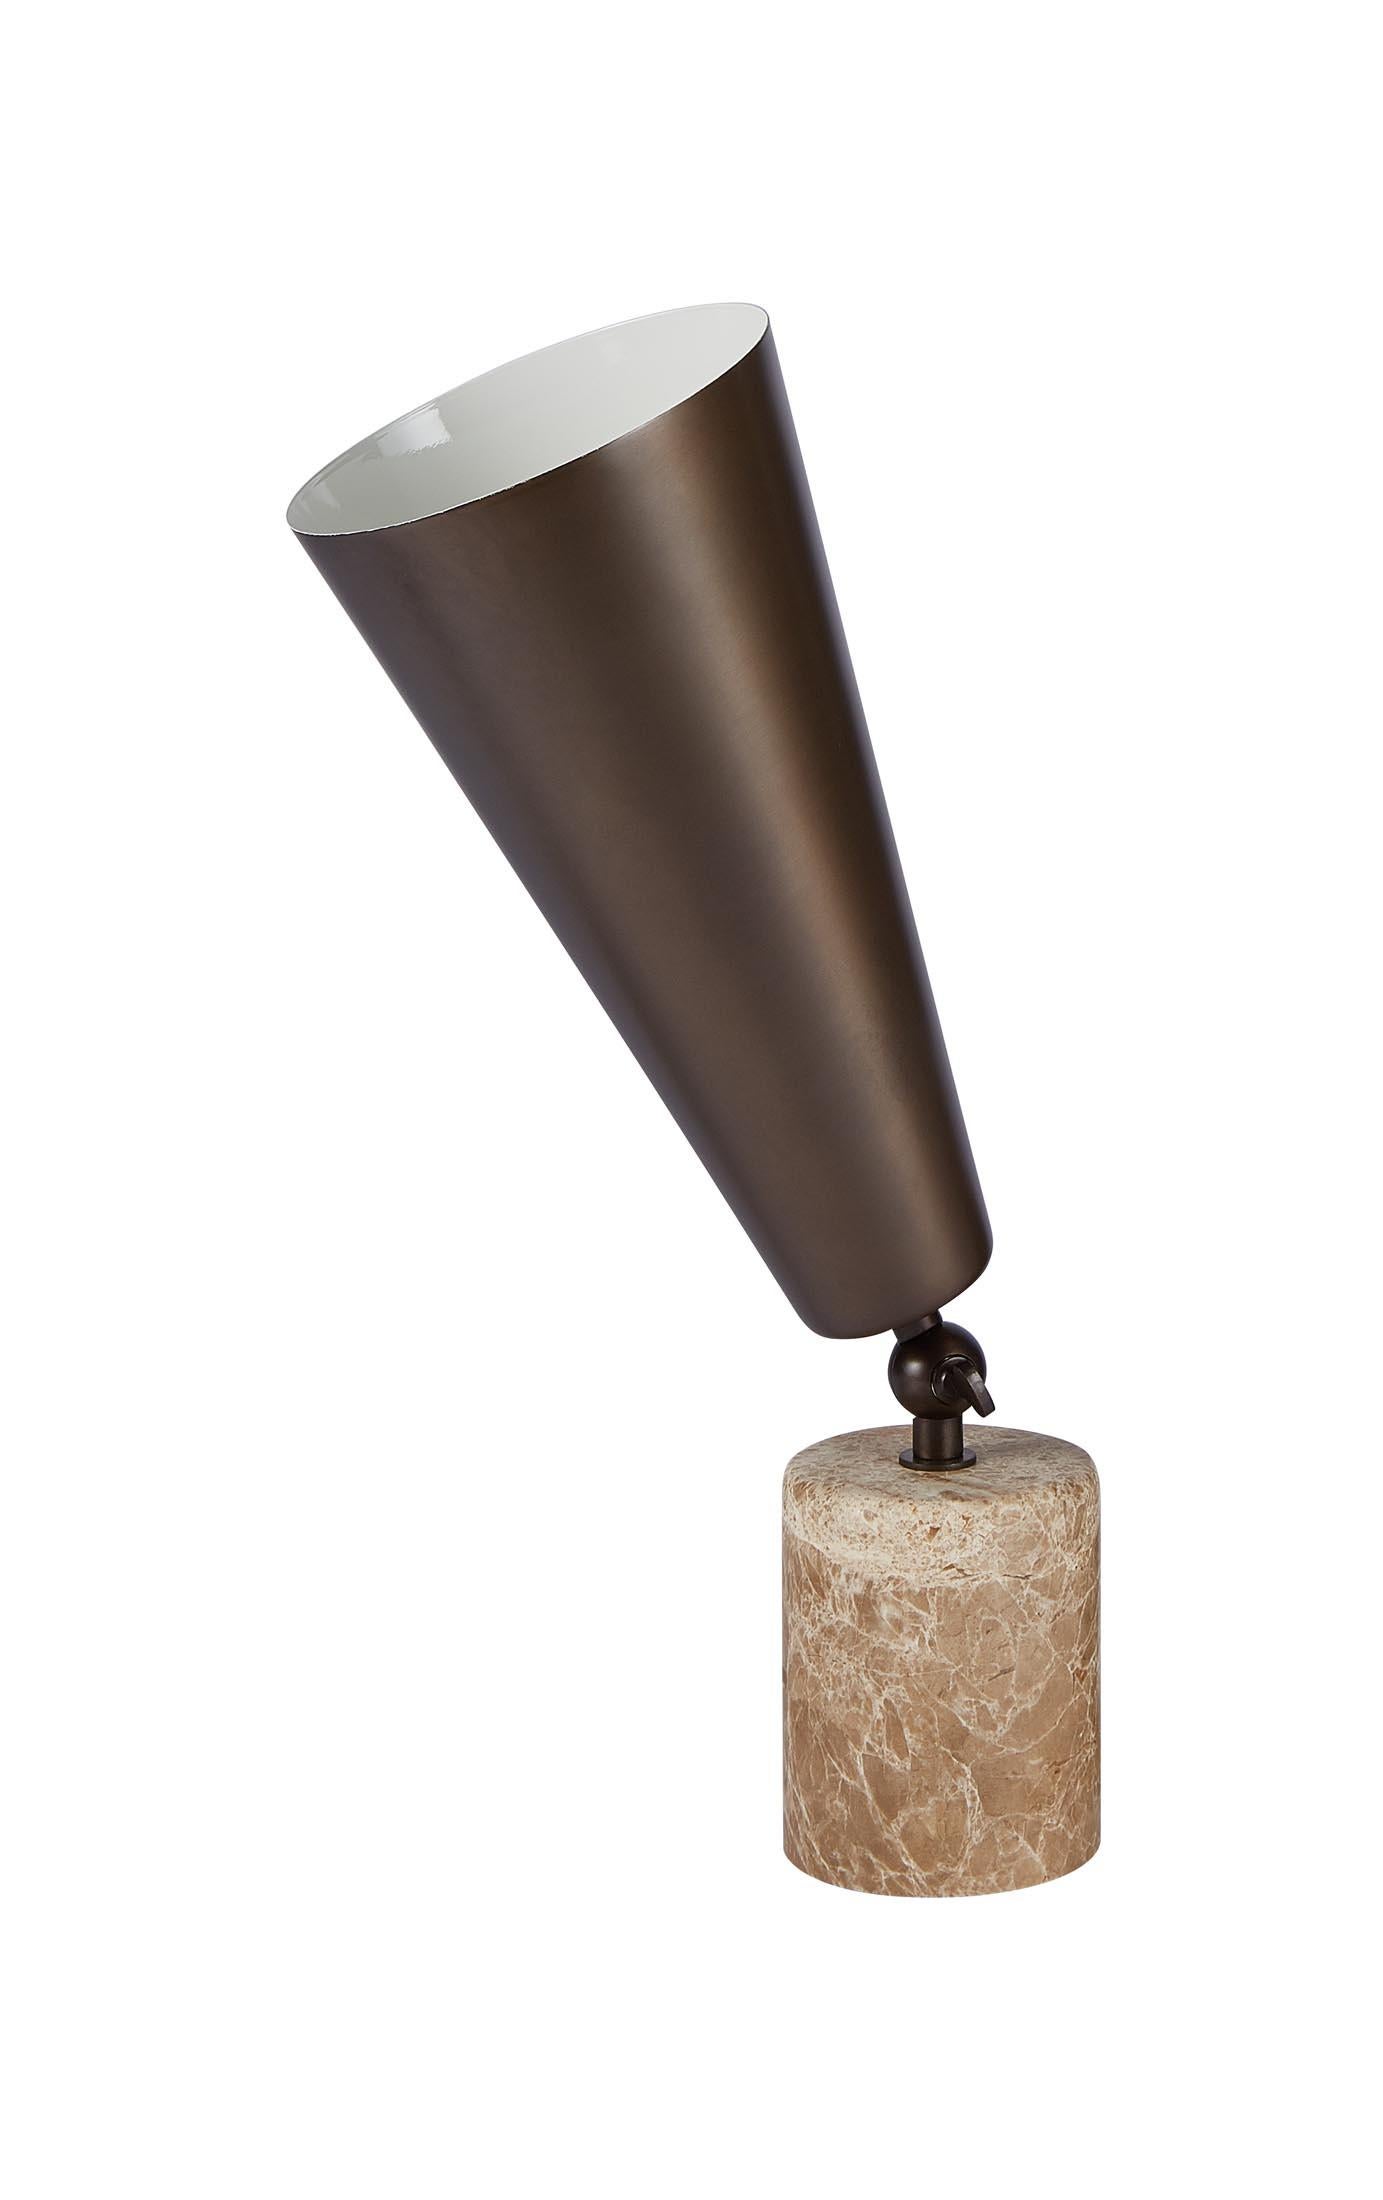 Tato Italia 'Vox' Table Lamp in White Carrara Marble, Chrome, and Glossy Black For Sale 7